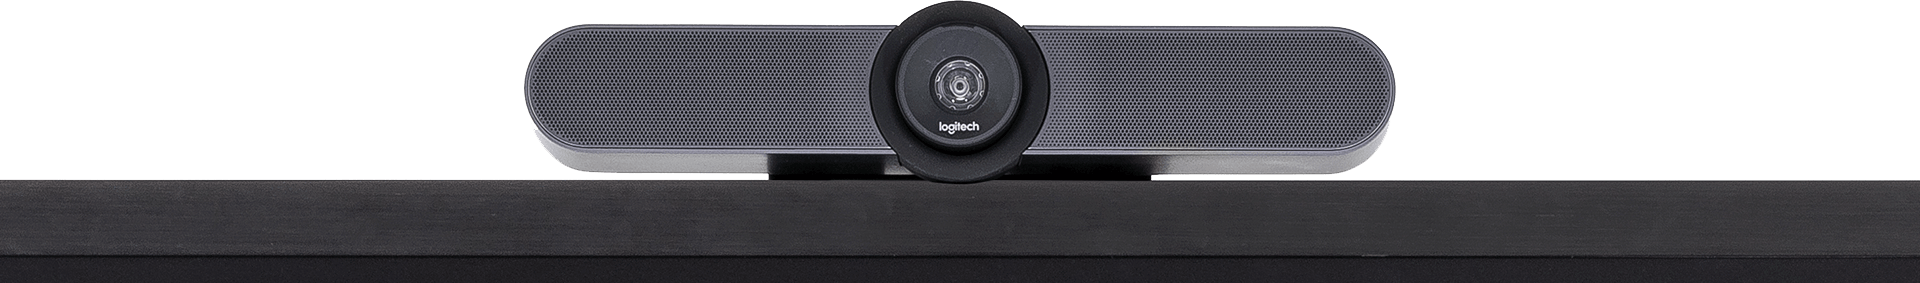 Avocor ALZ Series with Logitech Meetup Camera